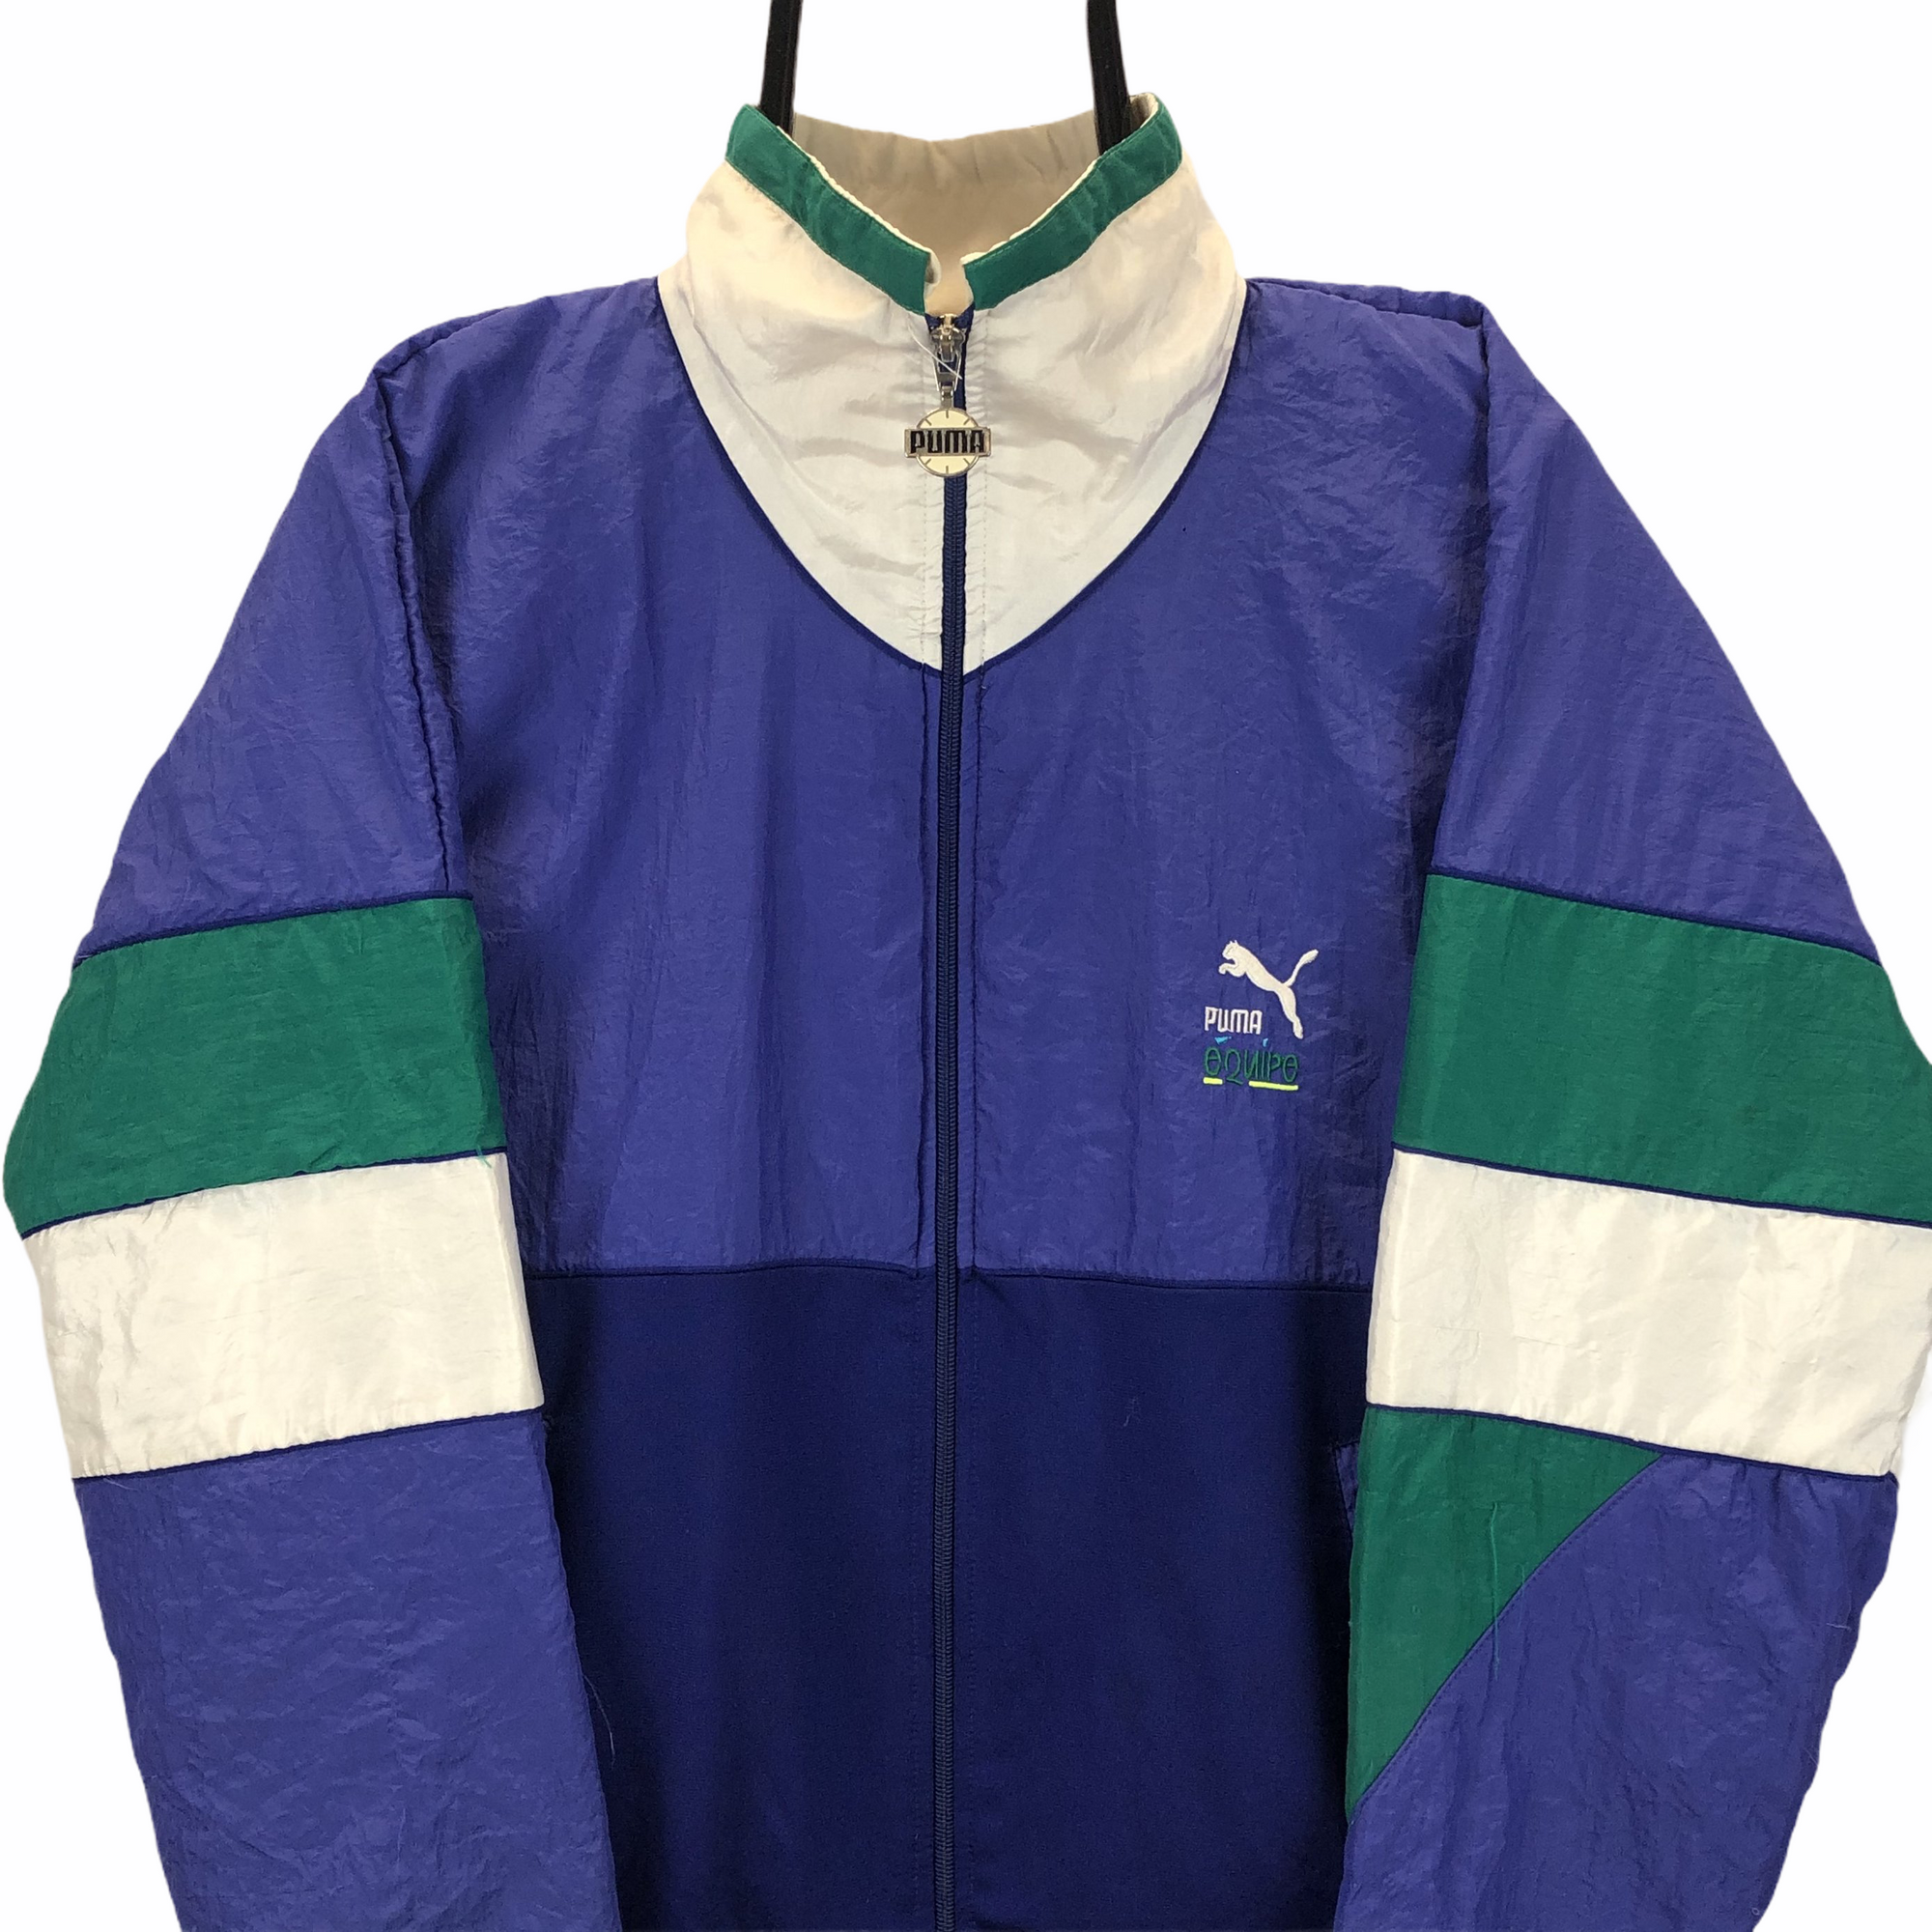 Vintage 80s Puma Equipe Track Jacket - Men's Small/Women's Medium